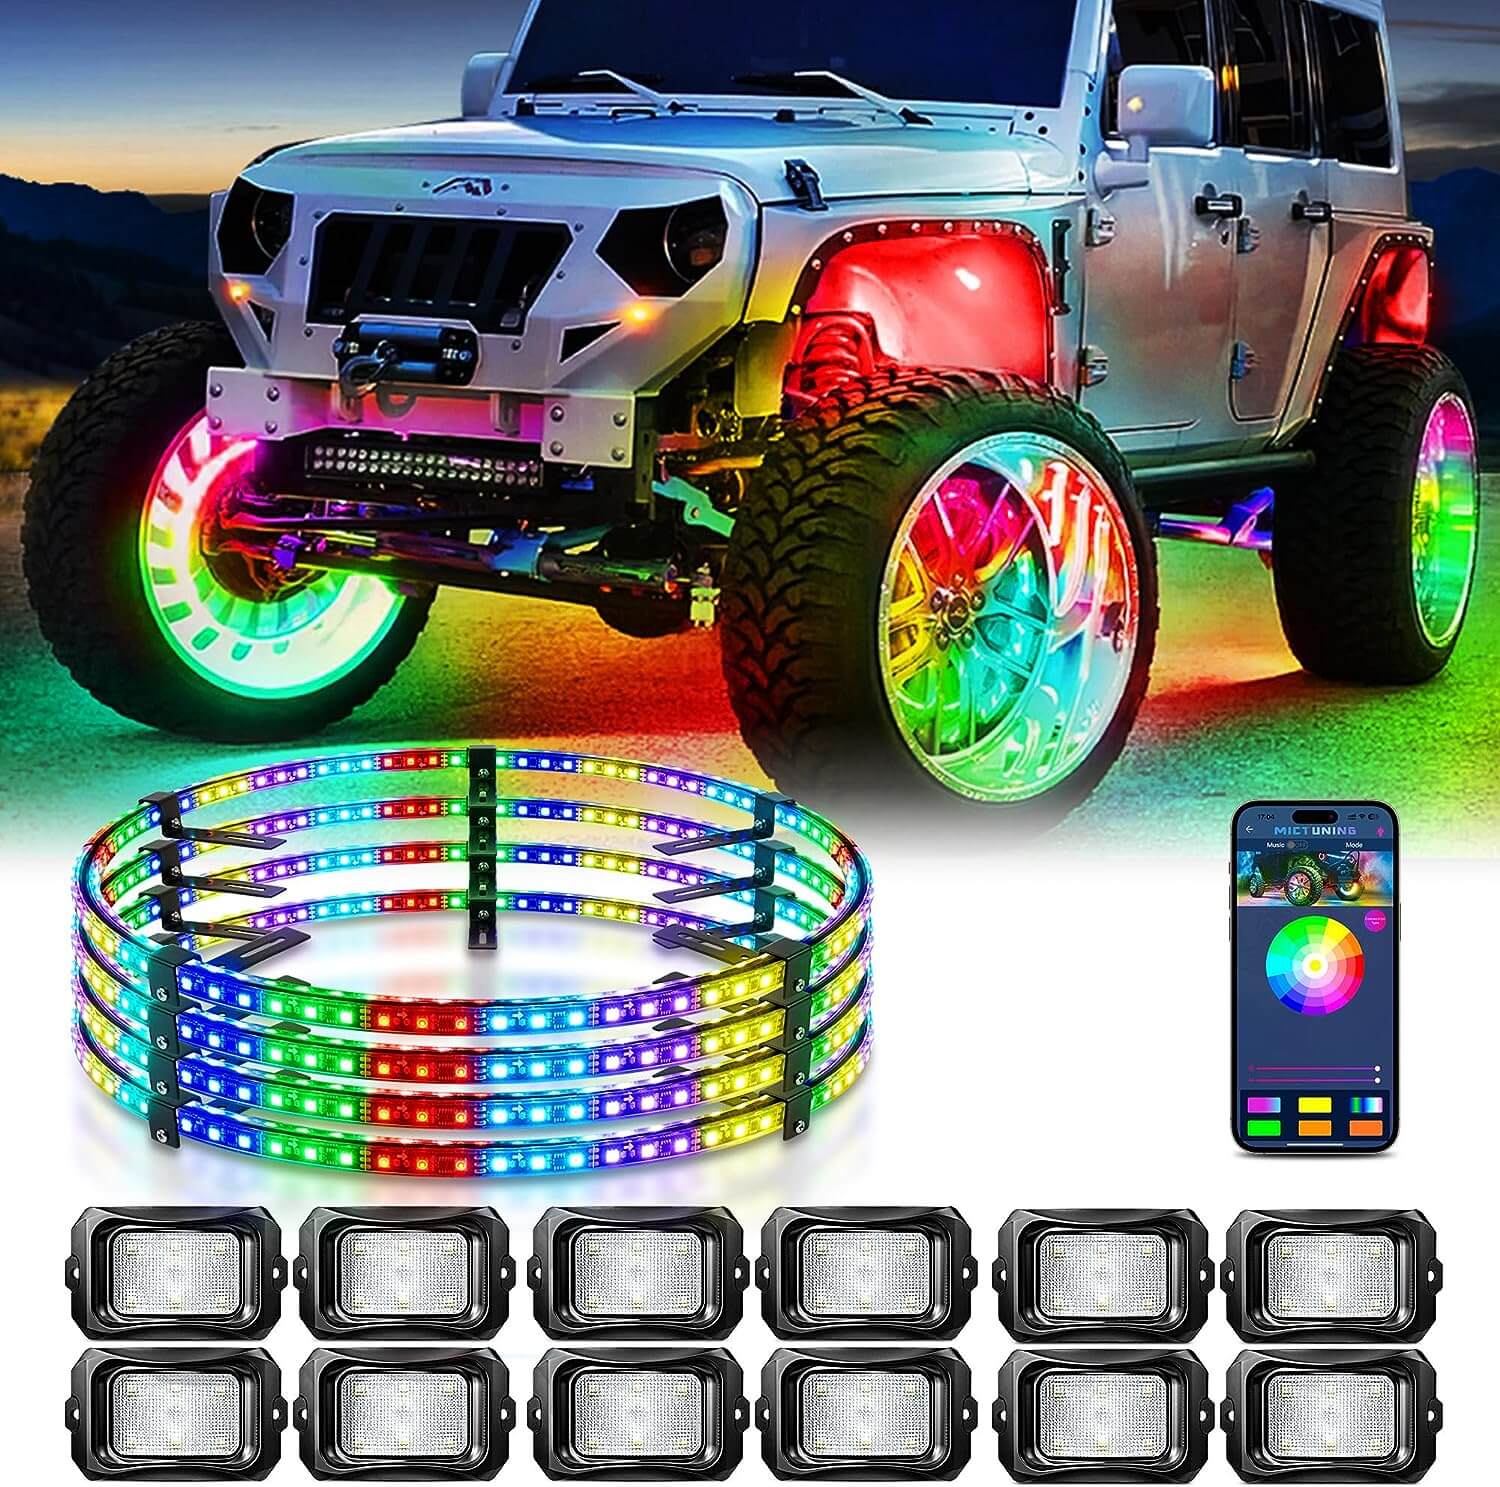 C2 RGB+IC LED Rock Lights Kit 8/12 Pods Bundle with 15.5″/17″ V1 RGB+IC Wheel Ring Lights Kit